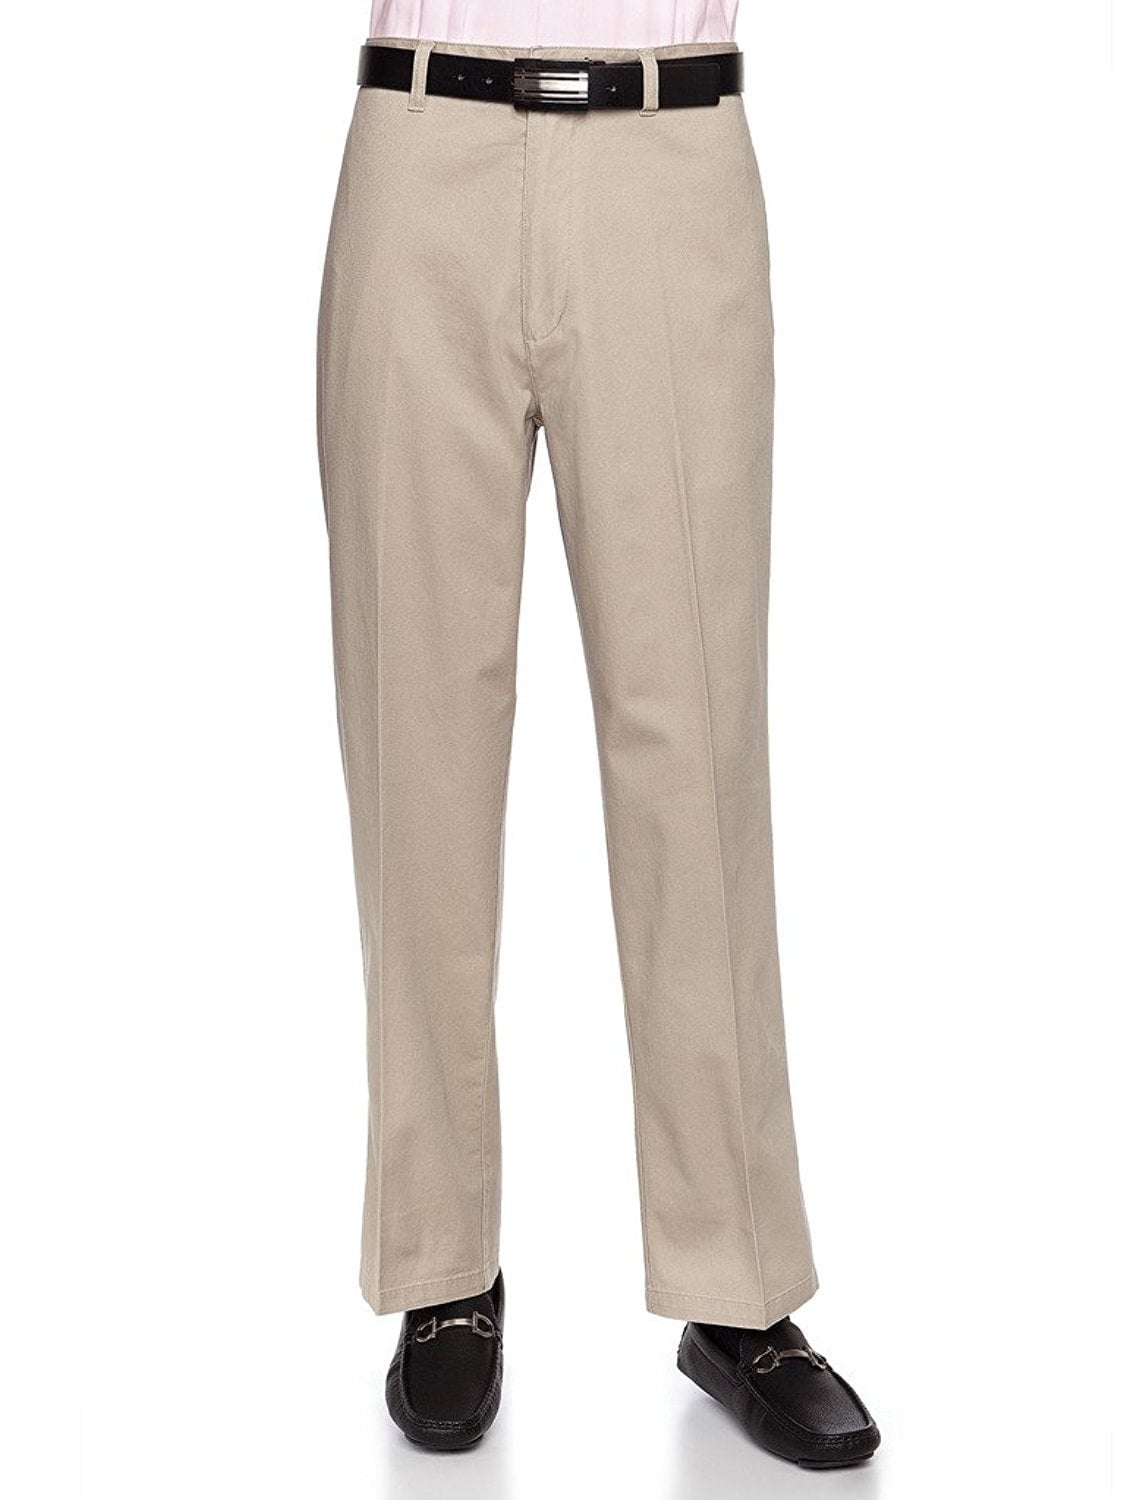 AKA Men's Flat-Front Traditional Fit Cotton Twill Pants - Walmart.com